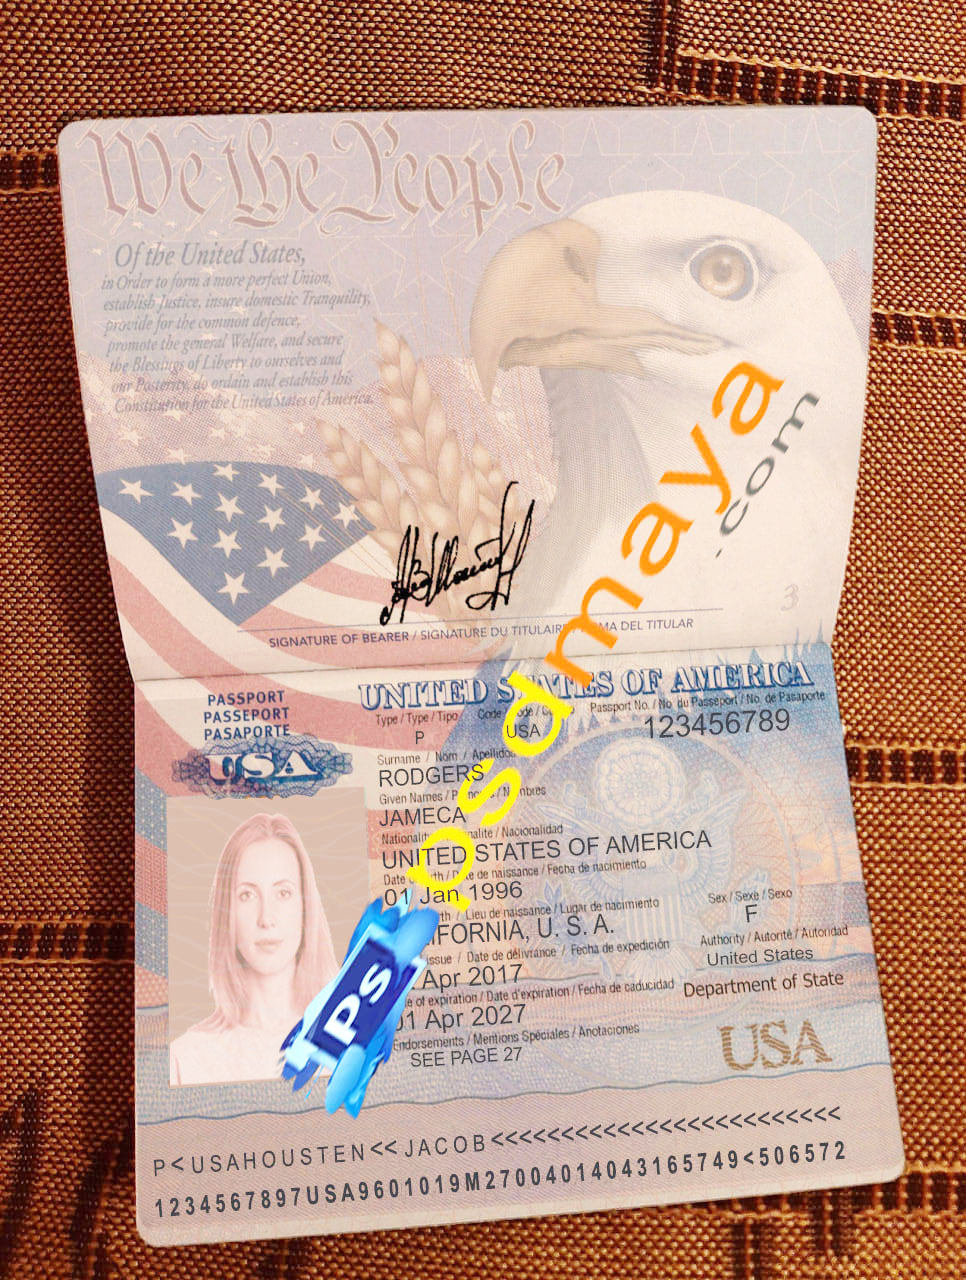 USA PASSPORT PSD FILE